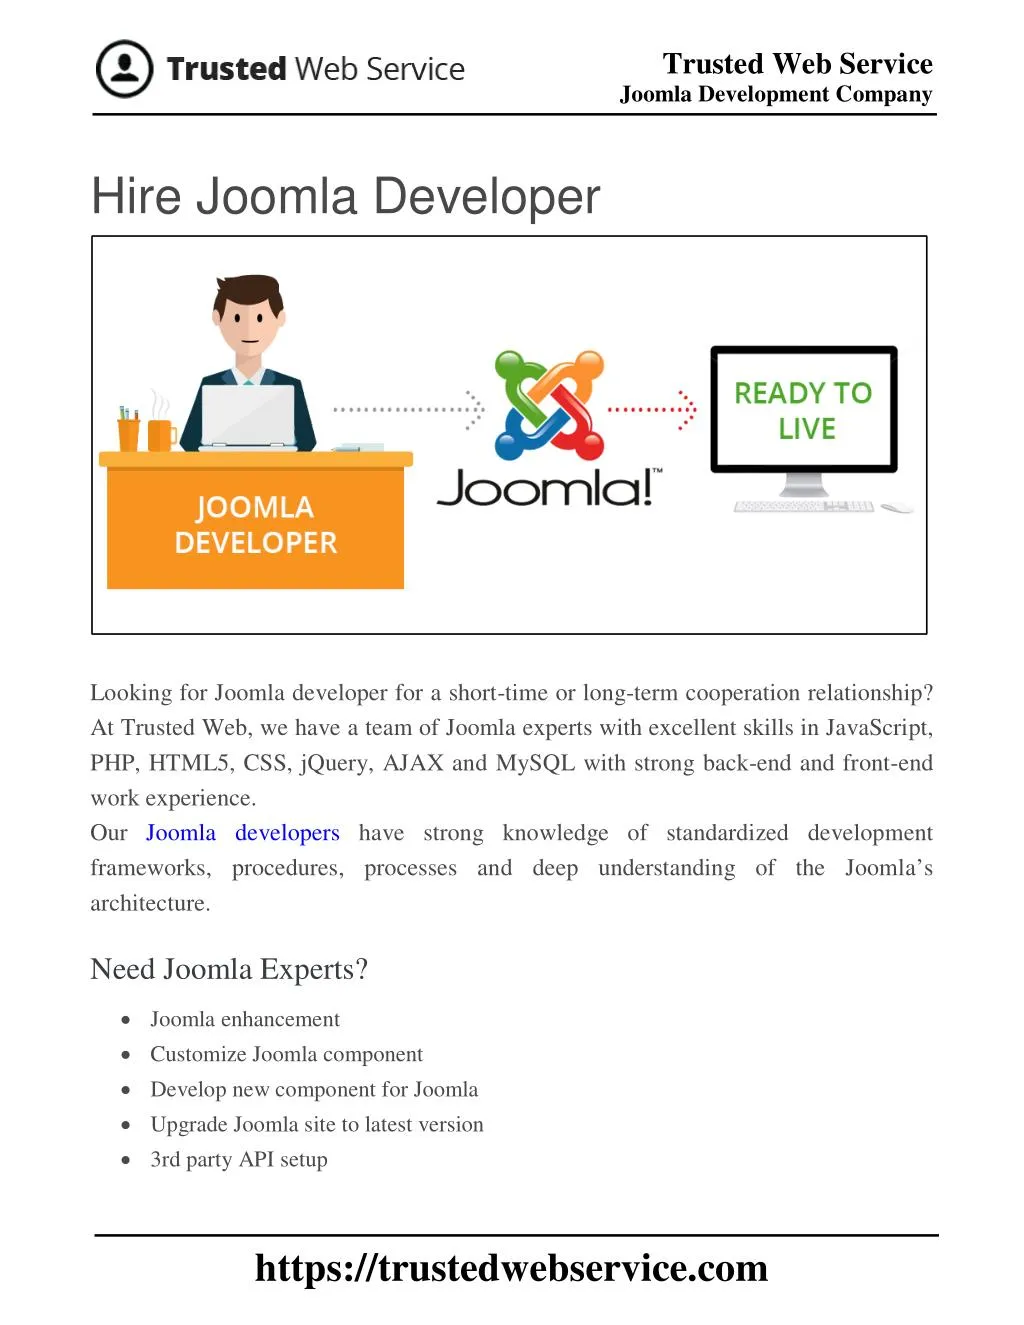 trusted web service joomla development company